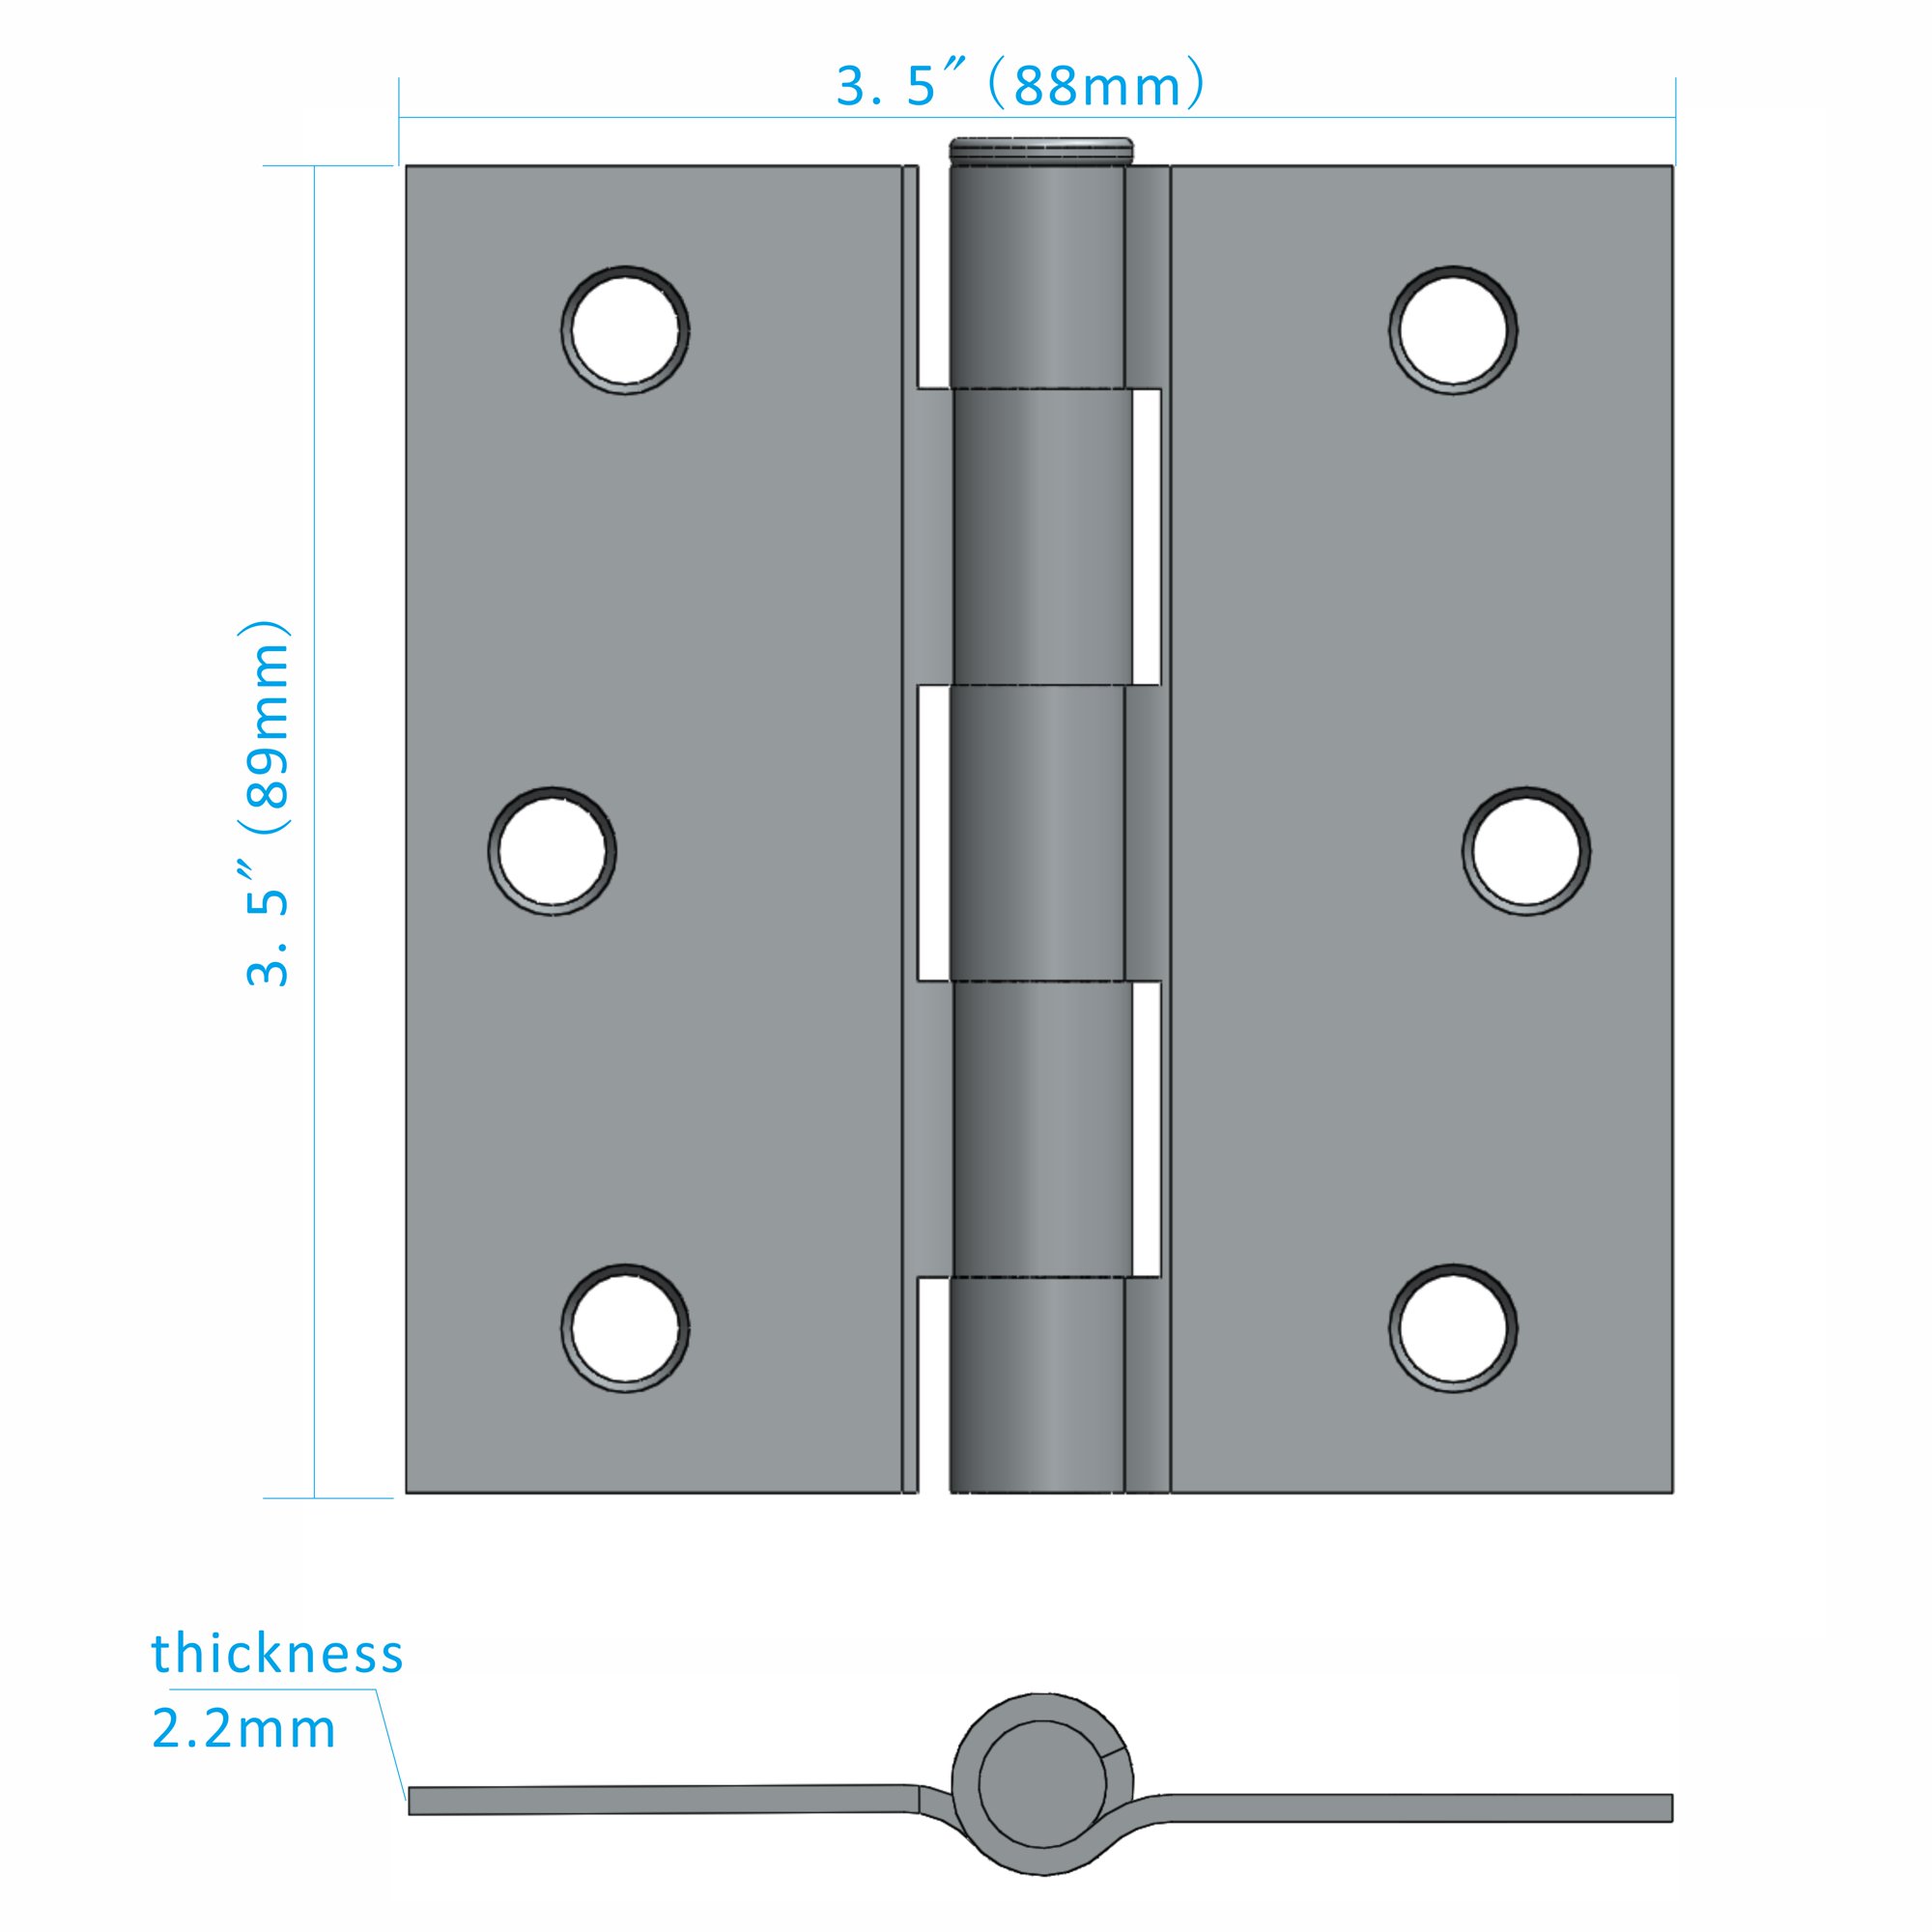 100 PACKS 3.5IN Steel Door Hinge Heavy Duty for Interior & Exterior Door, Square Corner,Thickness:2.2mm,Satin Nickel,Removable pin, with Screws - image 5 of 5